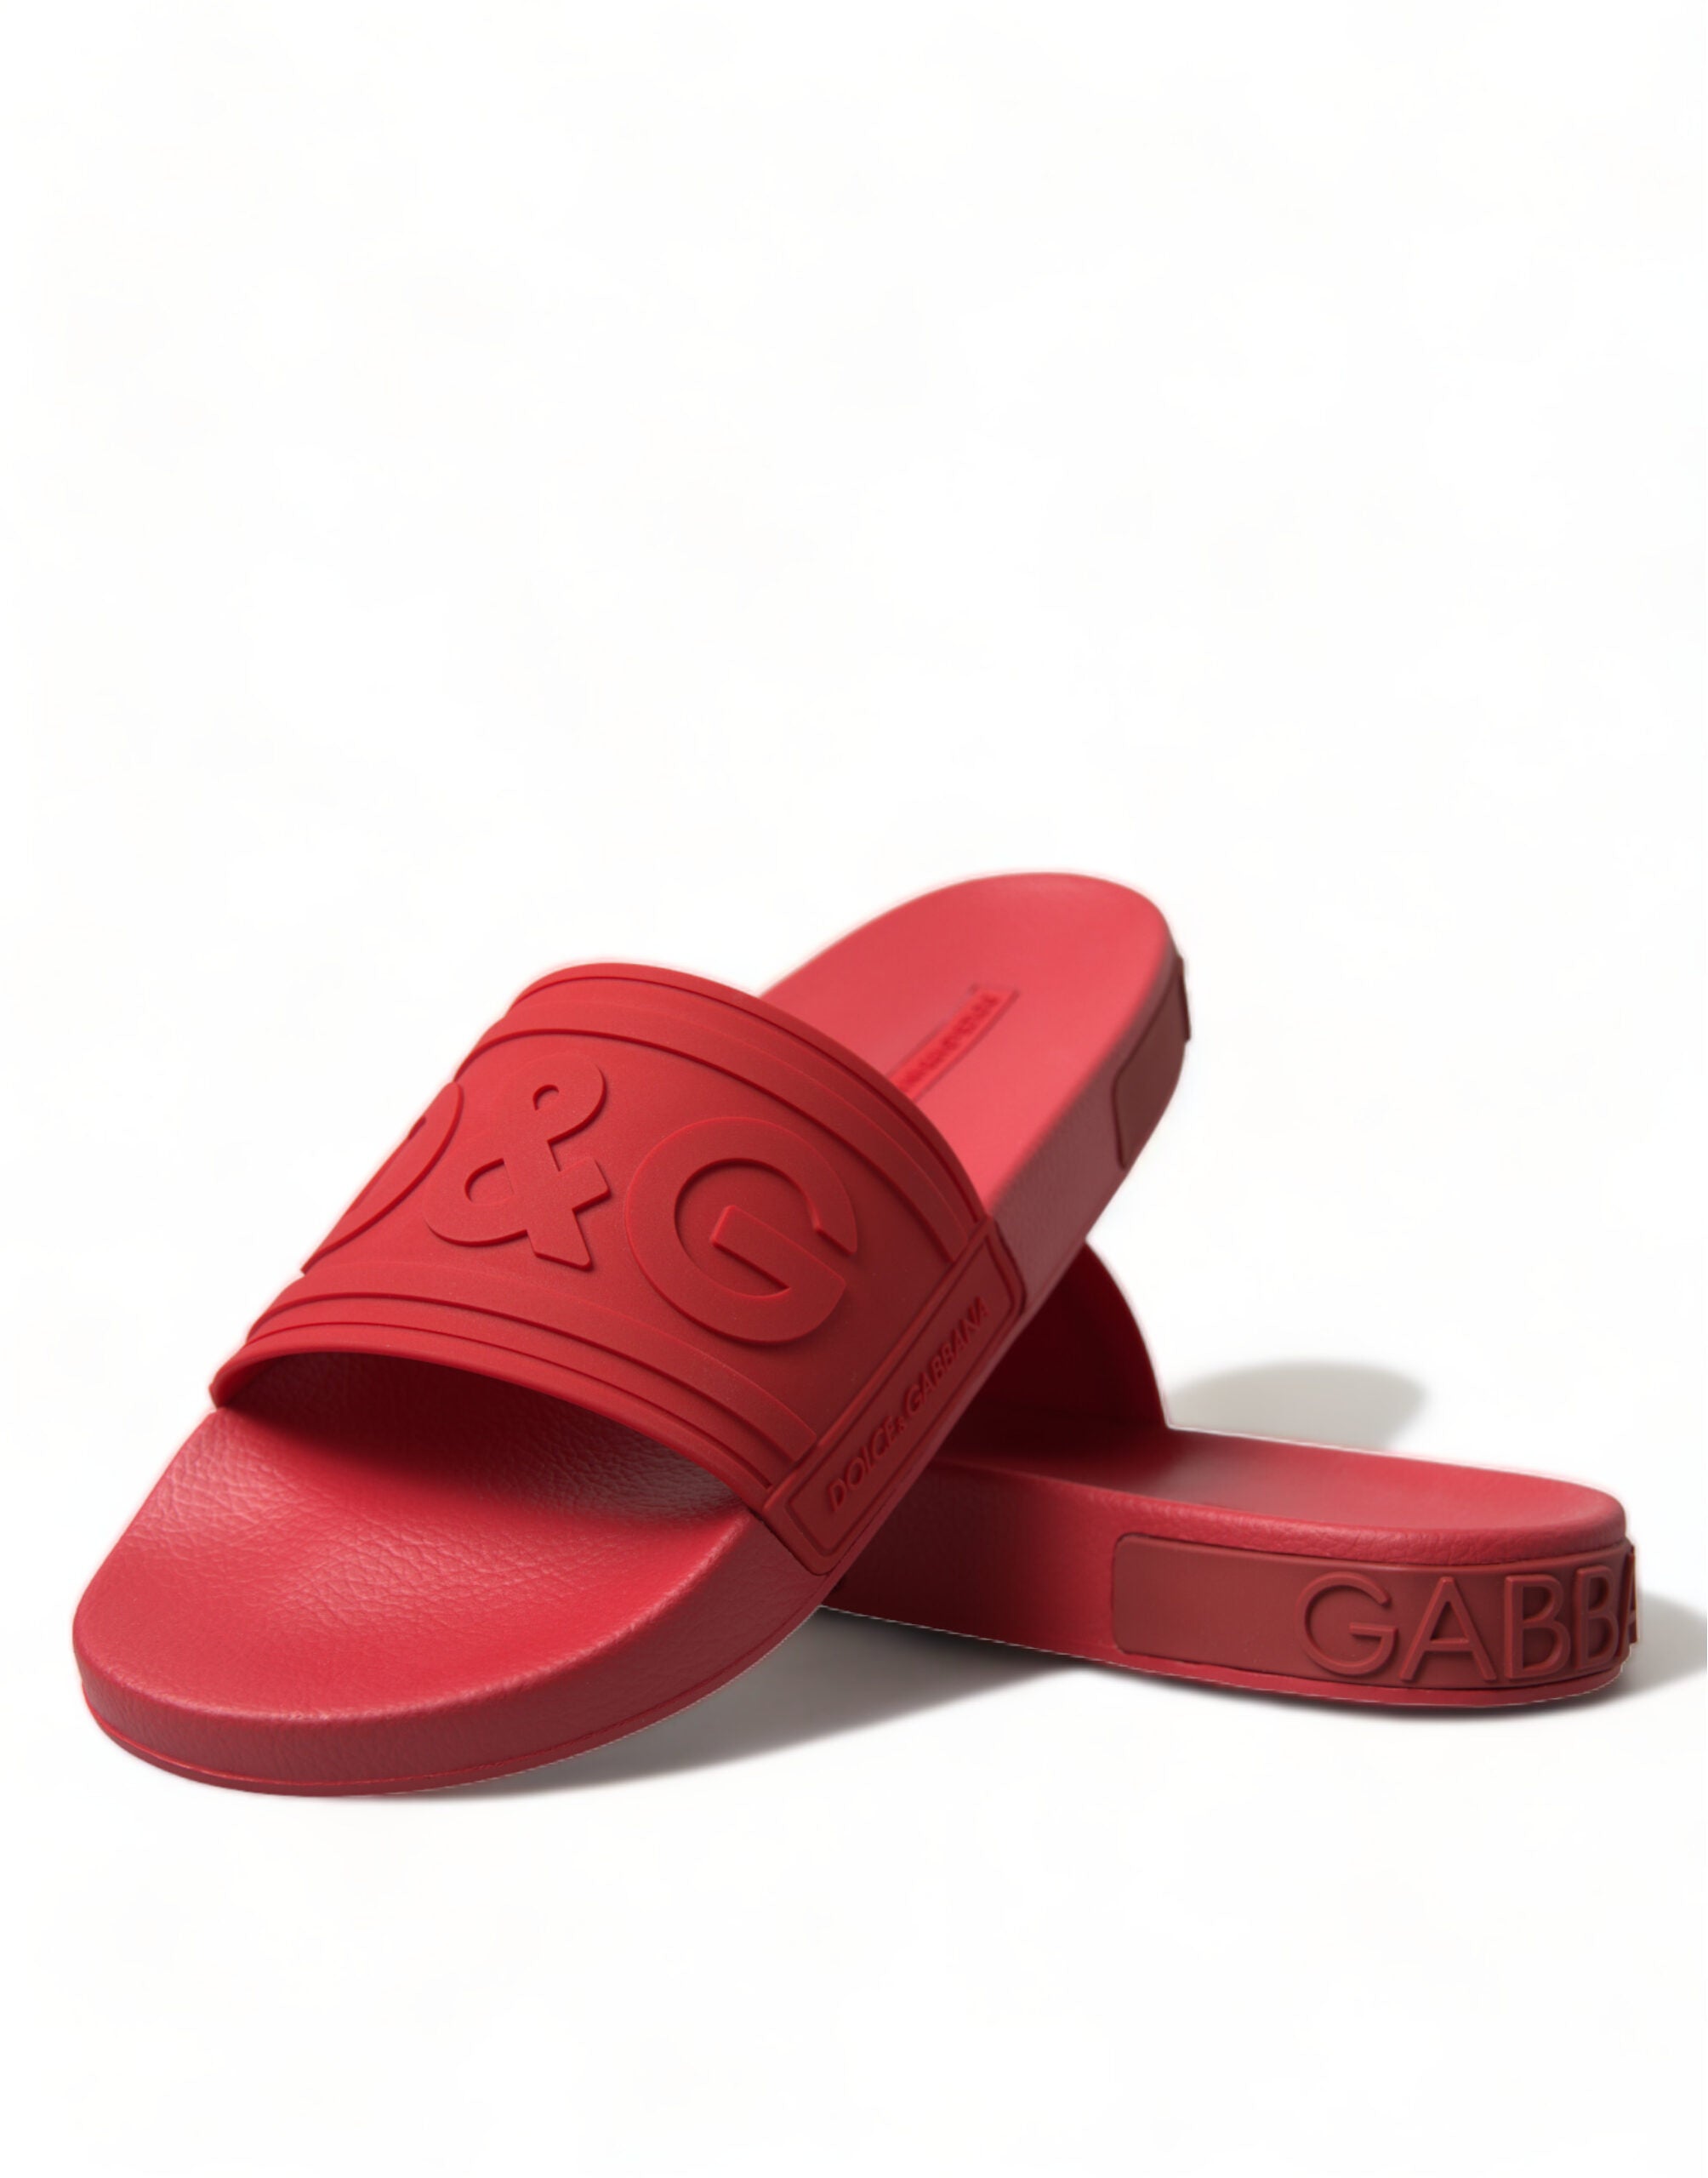 Dolce & Gabbana Rød Gummi Slides Flip-Flops-Modeoutlet